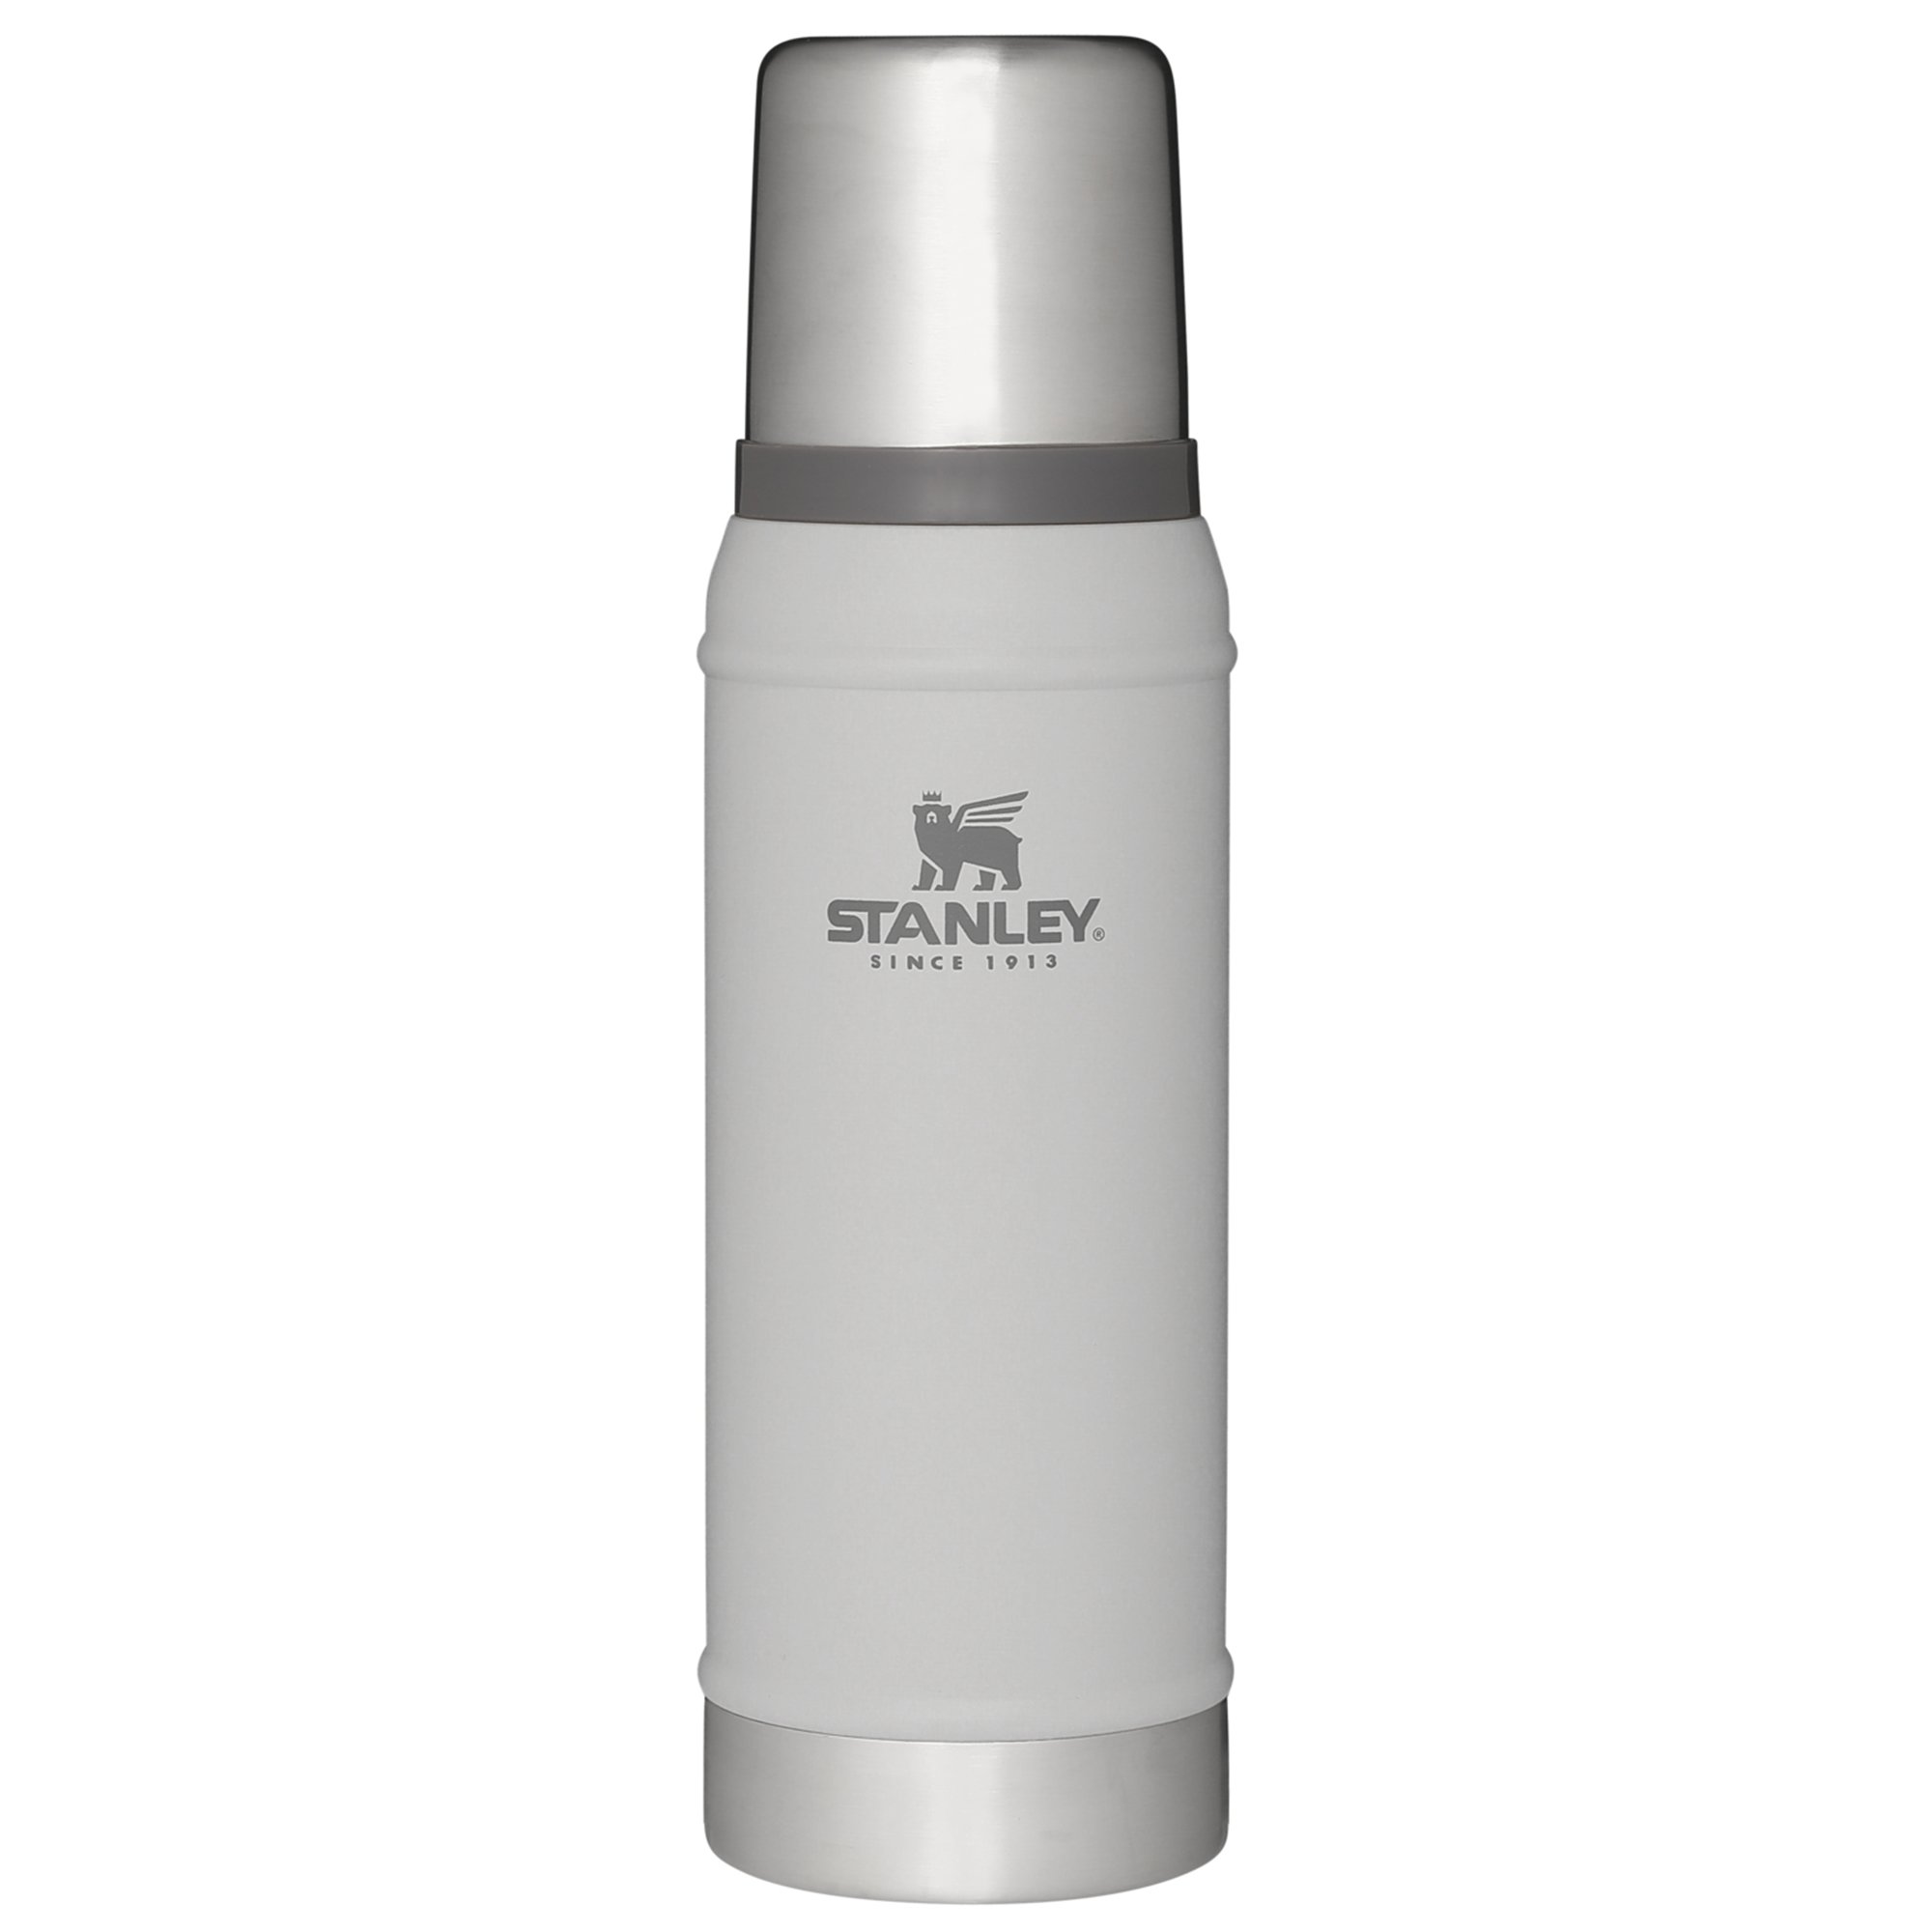 Stanley Legendary Classic Bottle termoflaske 0,75 liter ash